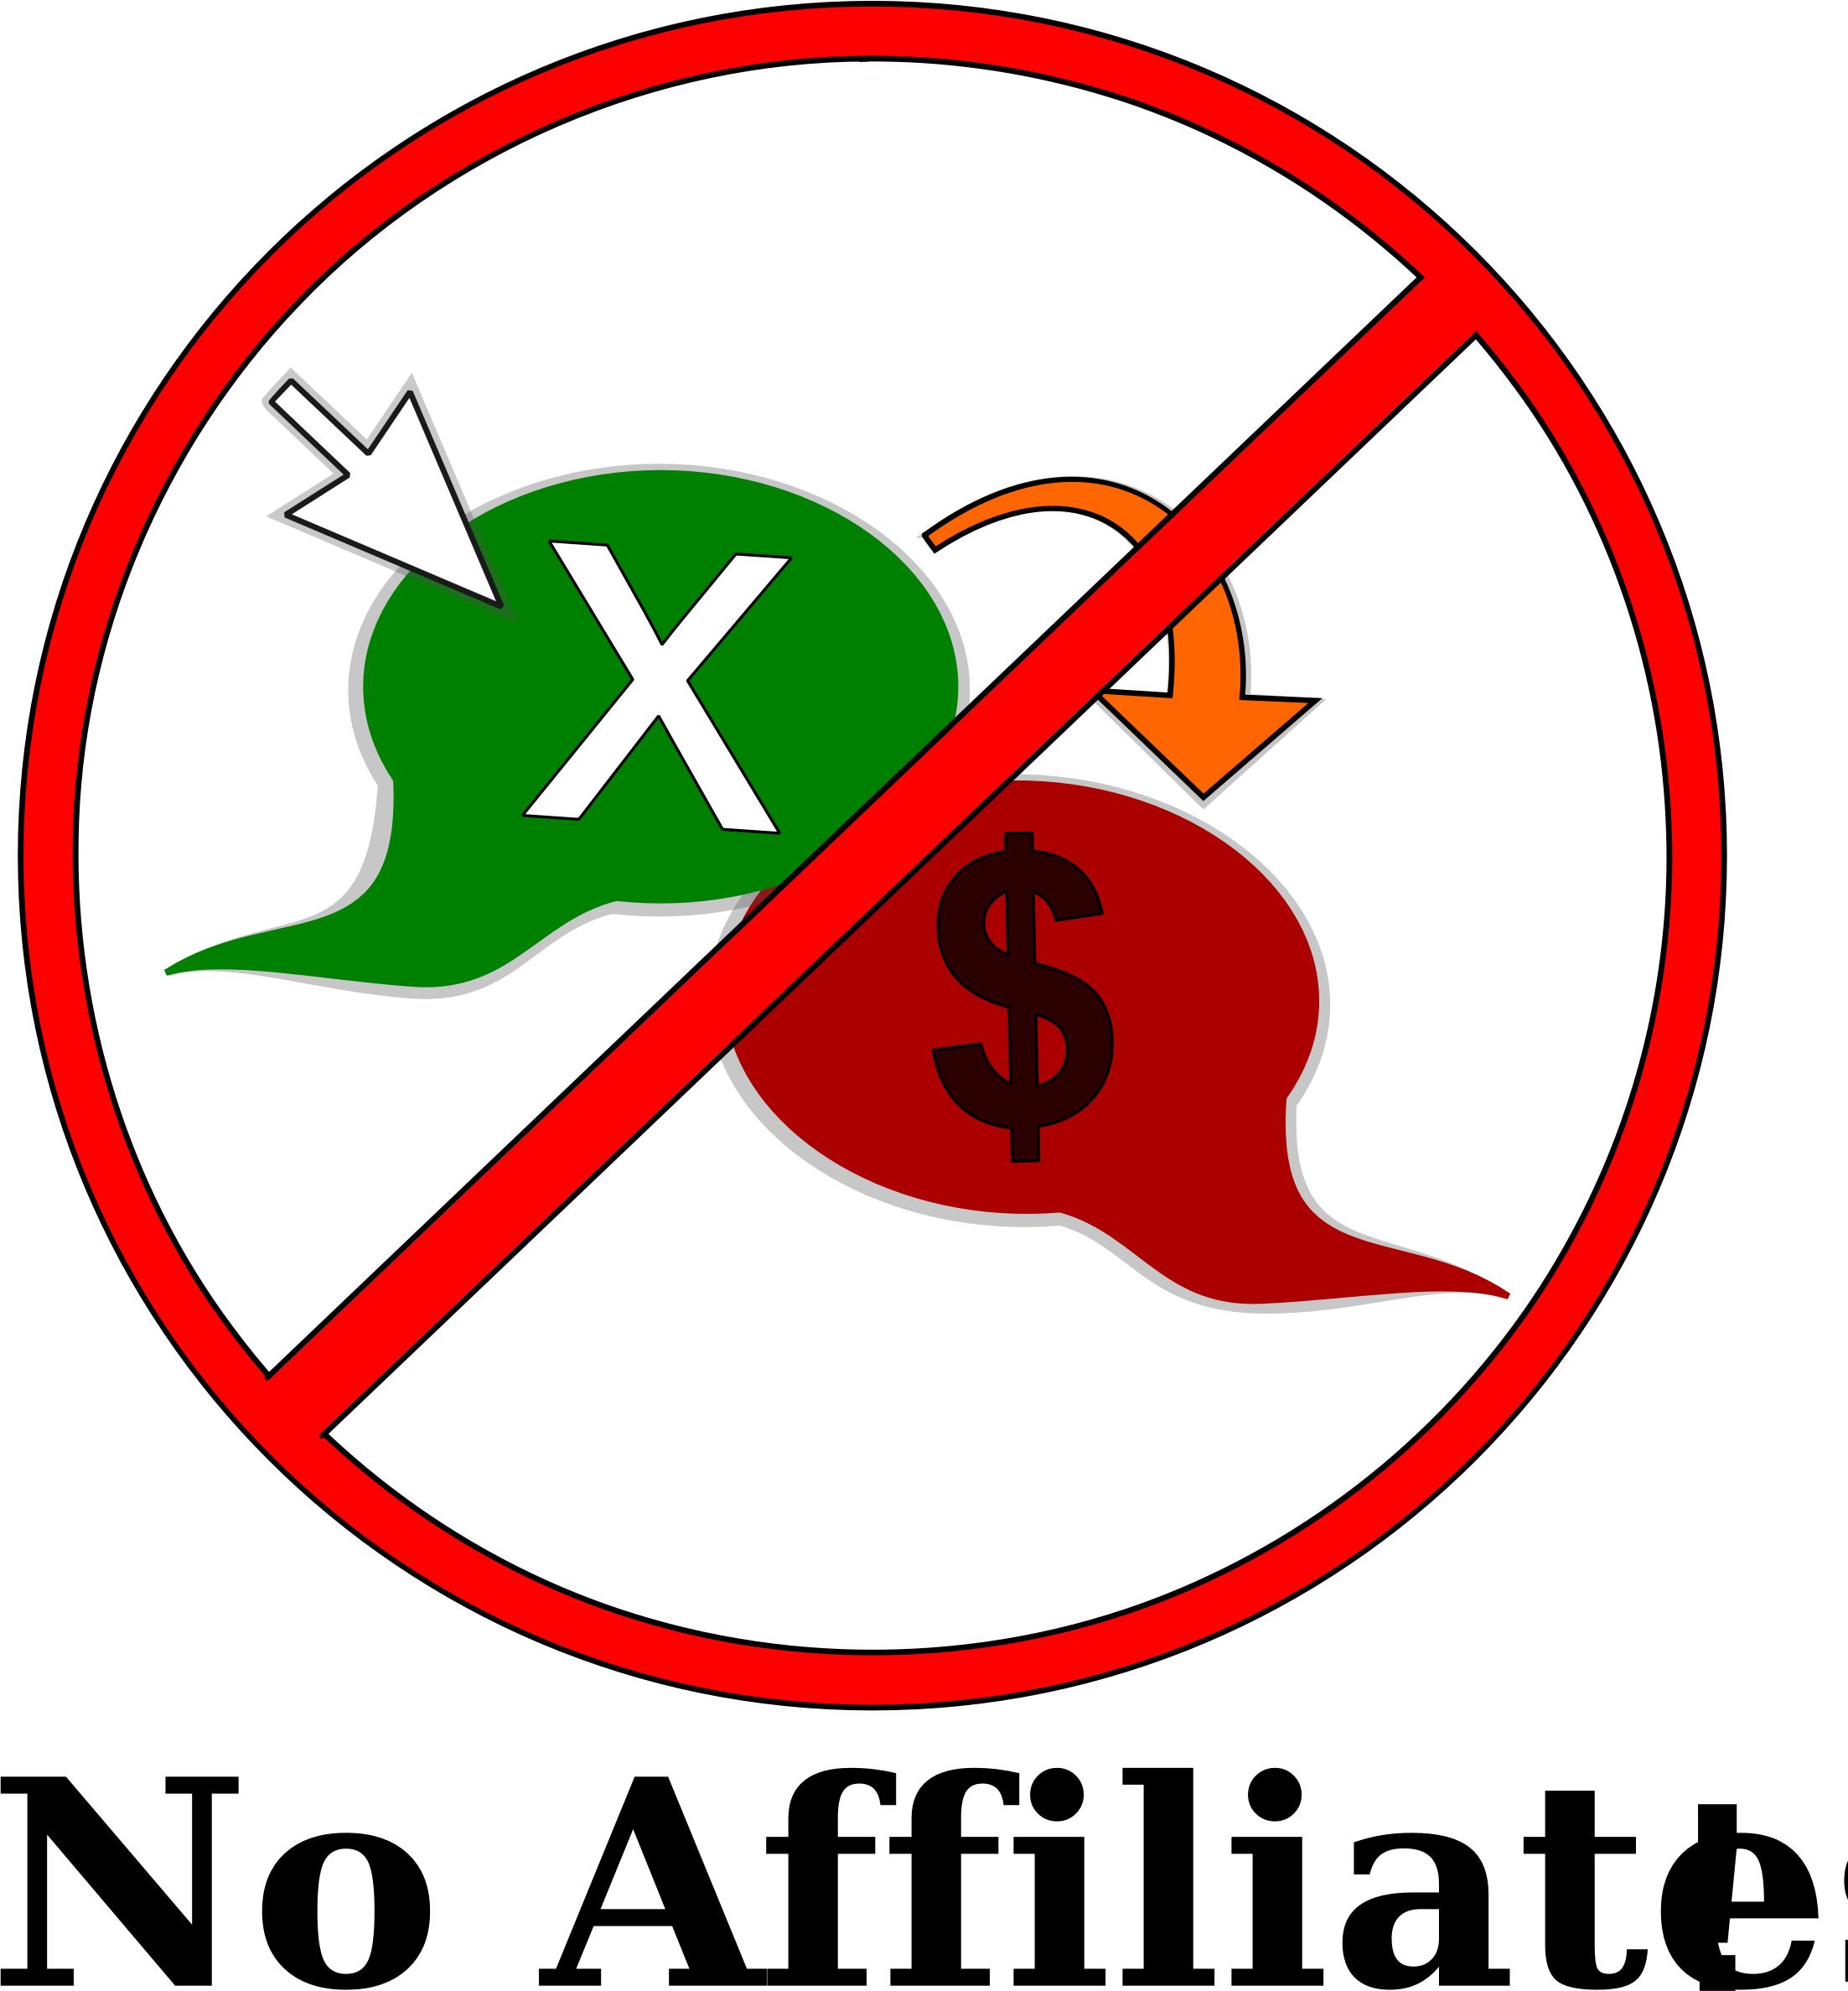 Anti advertising/affiliate logo sign png